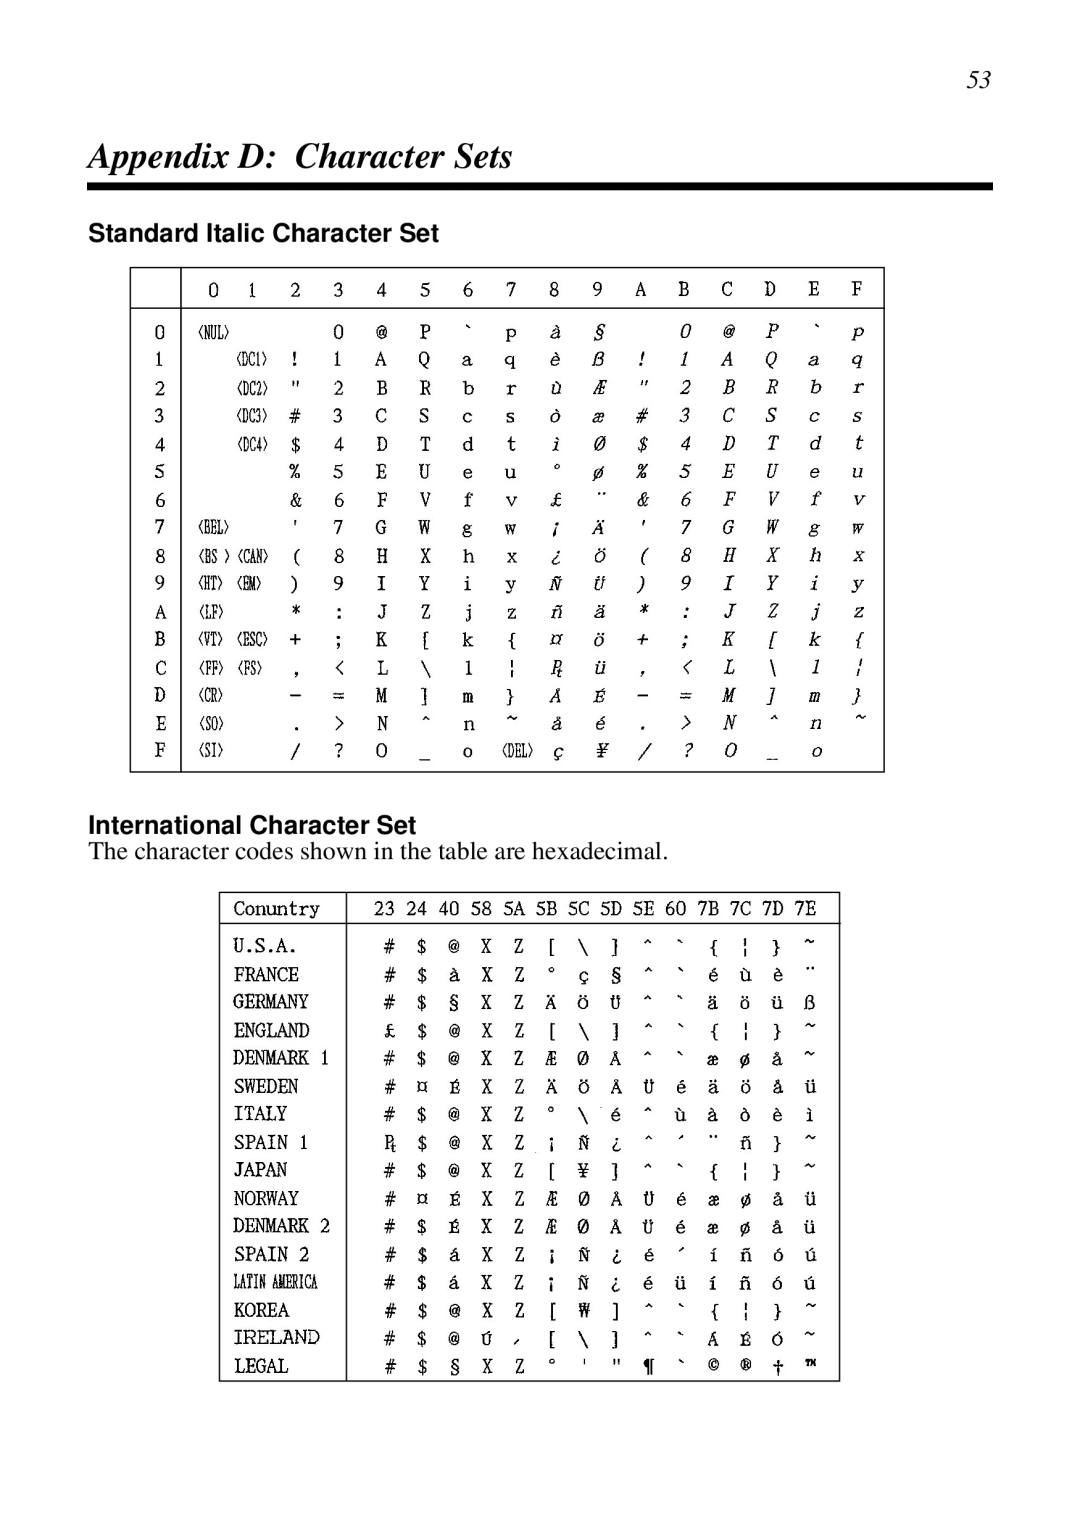 Star Micronics LC-8021 manual Appendix D Character Sets, Standard Italic Character Set International Character Set 